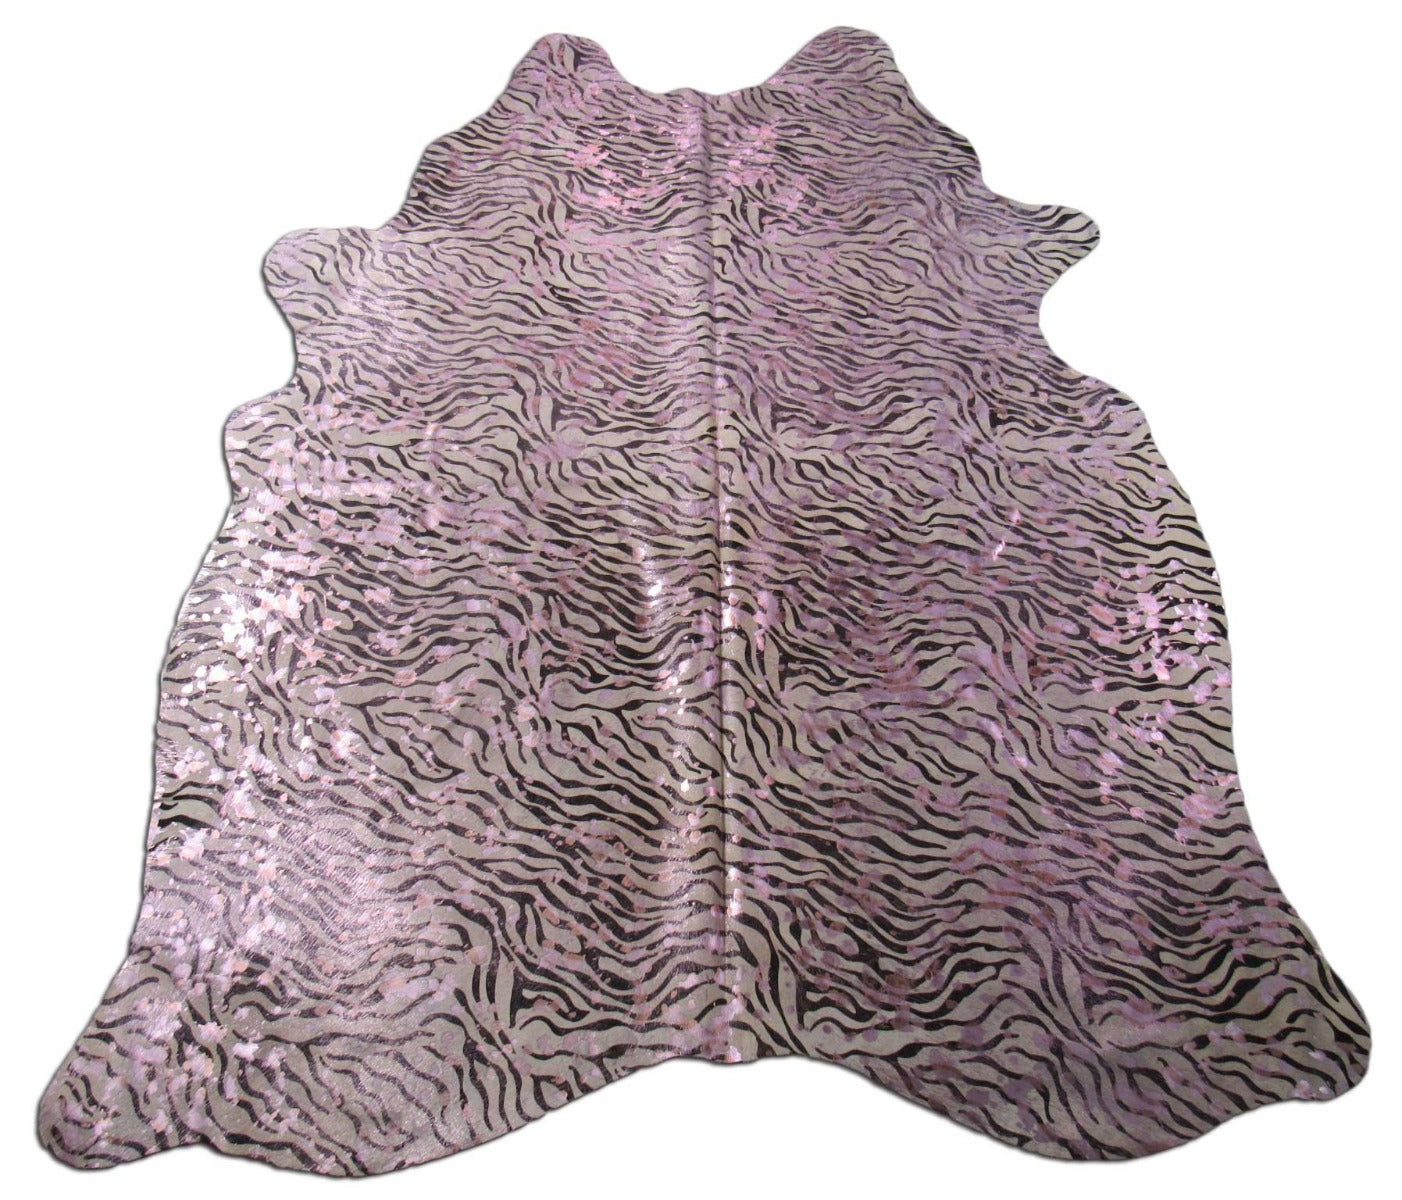 Baby Zebra Cowhide Rug Size: 7' x 5 1/2' Pink/Rose Gold Metallic Acid Washed Cowhide Rug C-1365